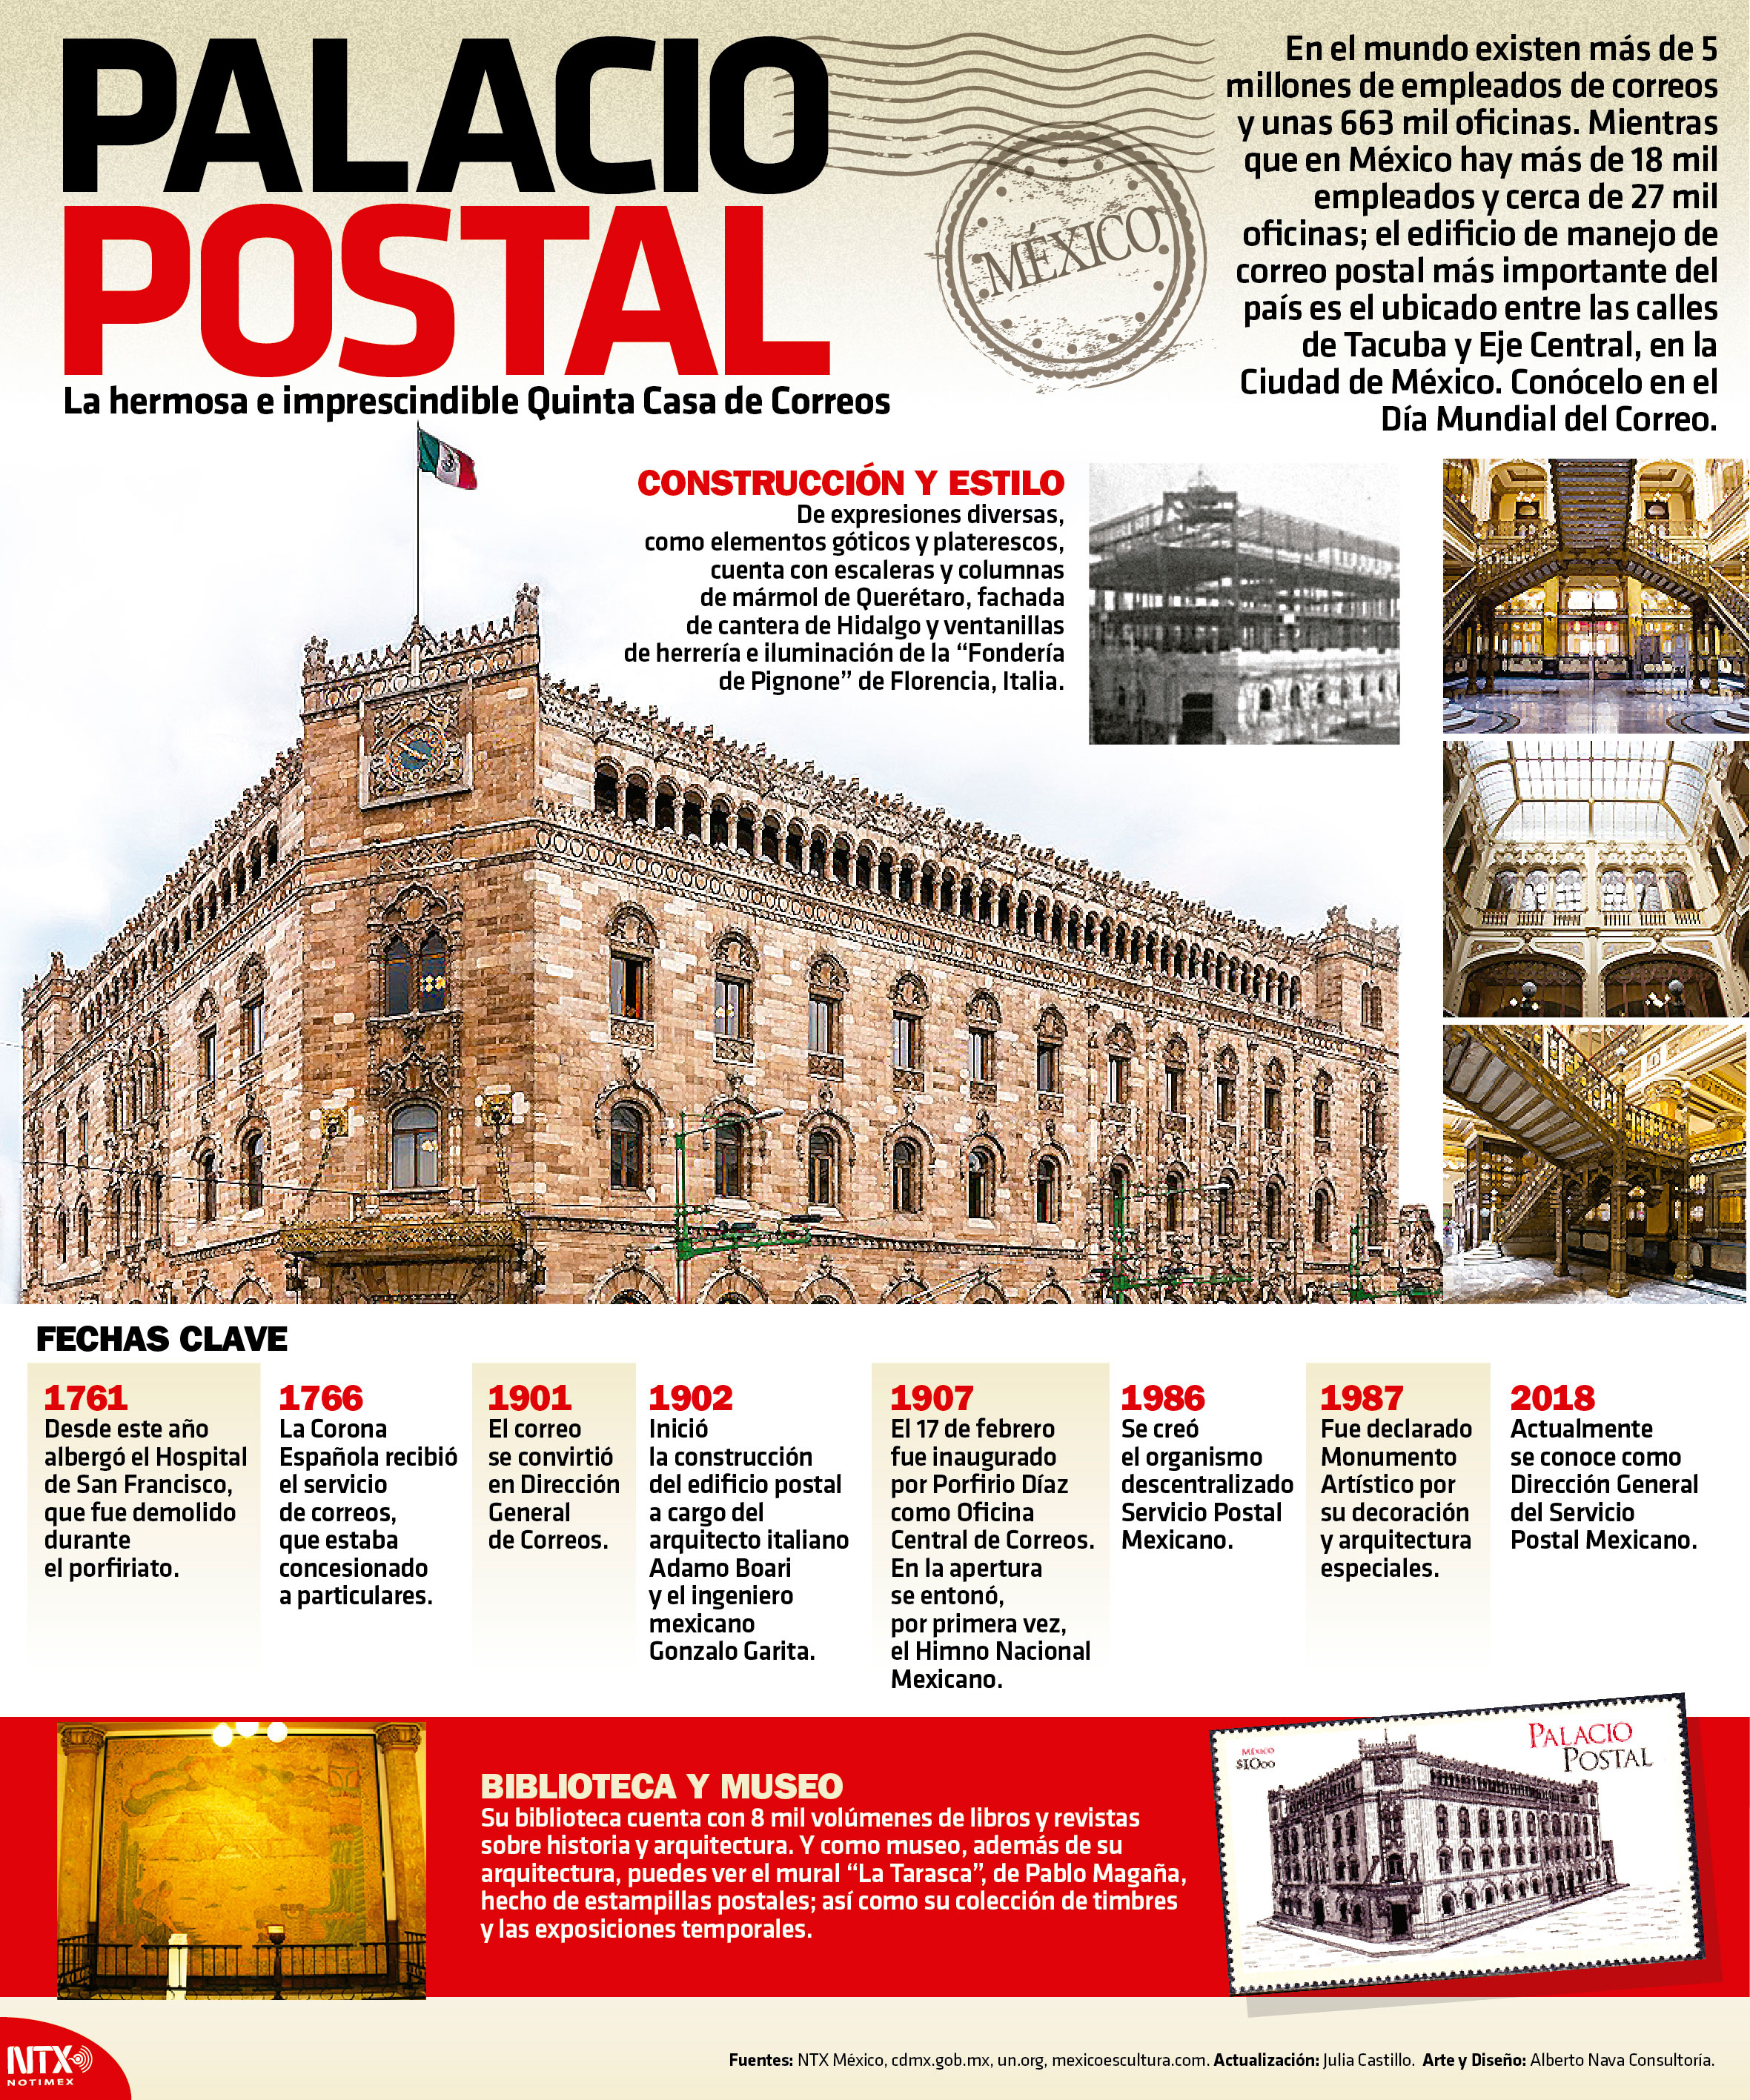 Palacio Postal